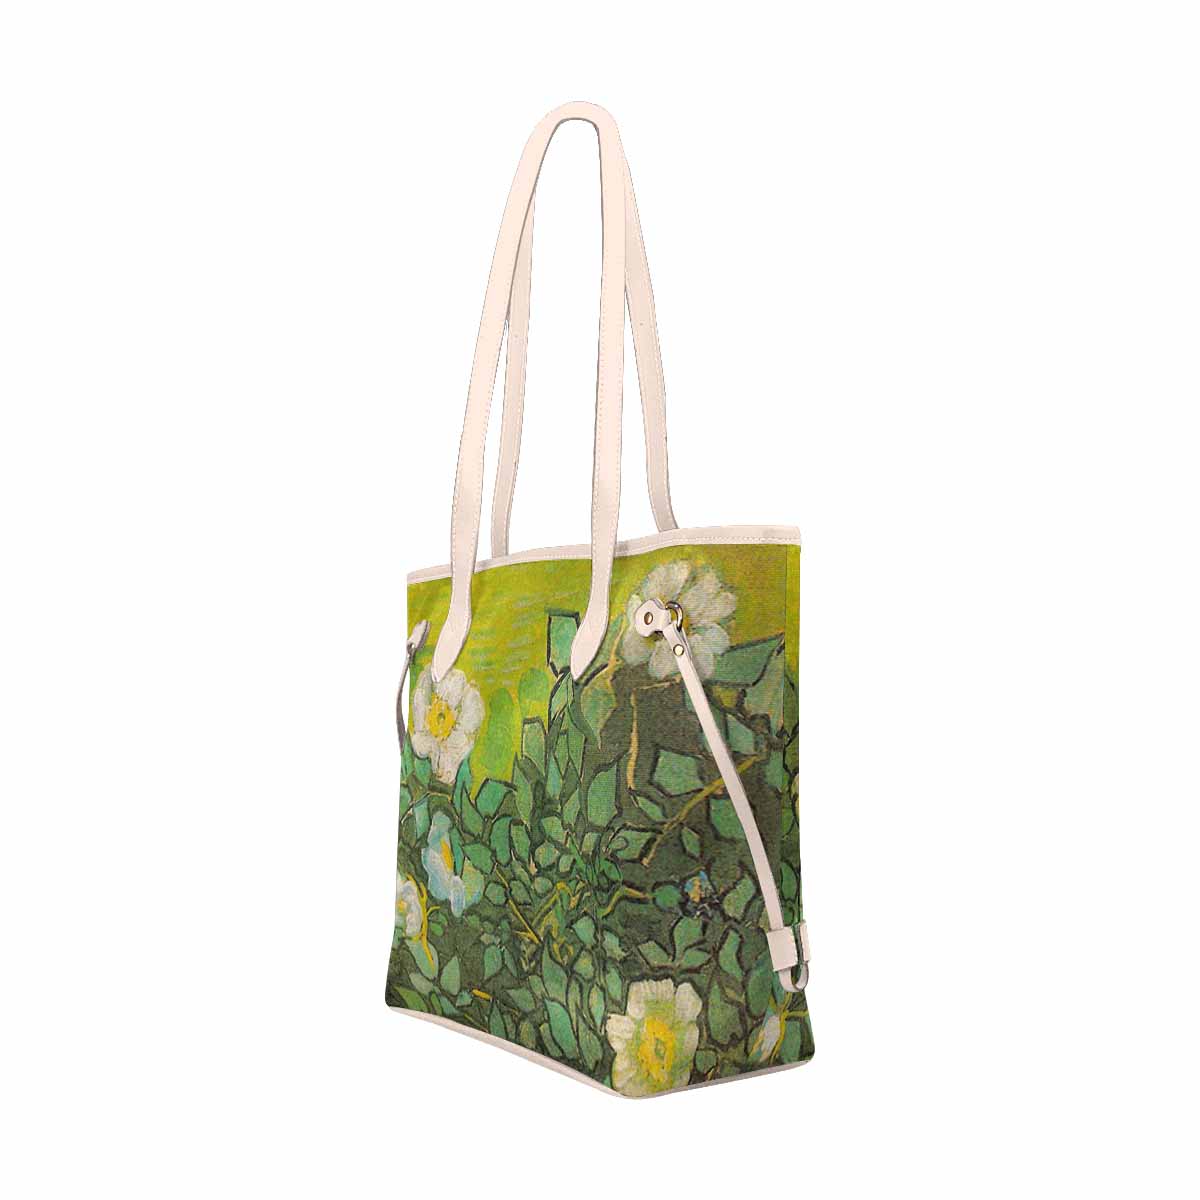 Vintage Floral Handbag, Classic Handbag, Mod 1695361 Design 01, BEIGE/TAN TRIM